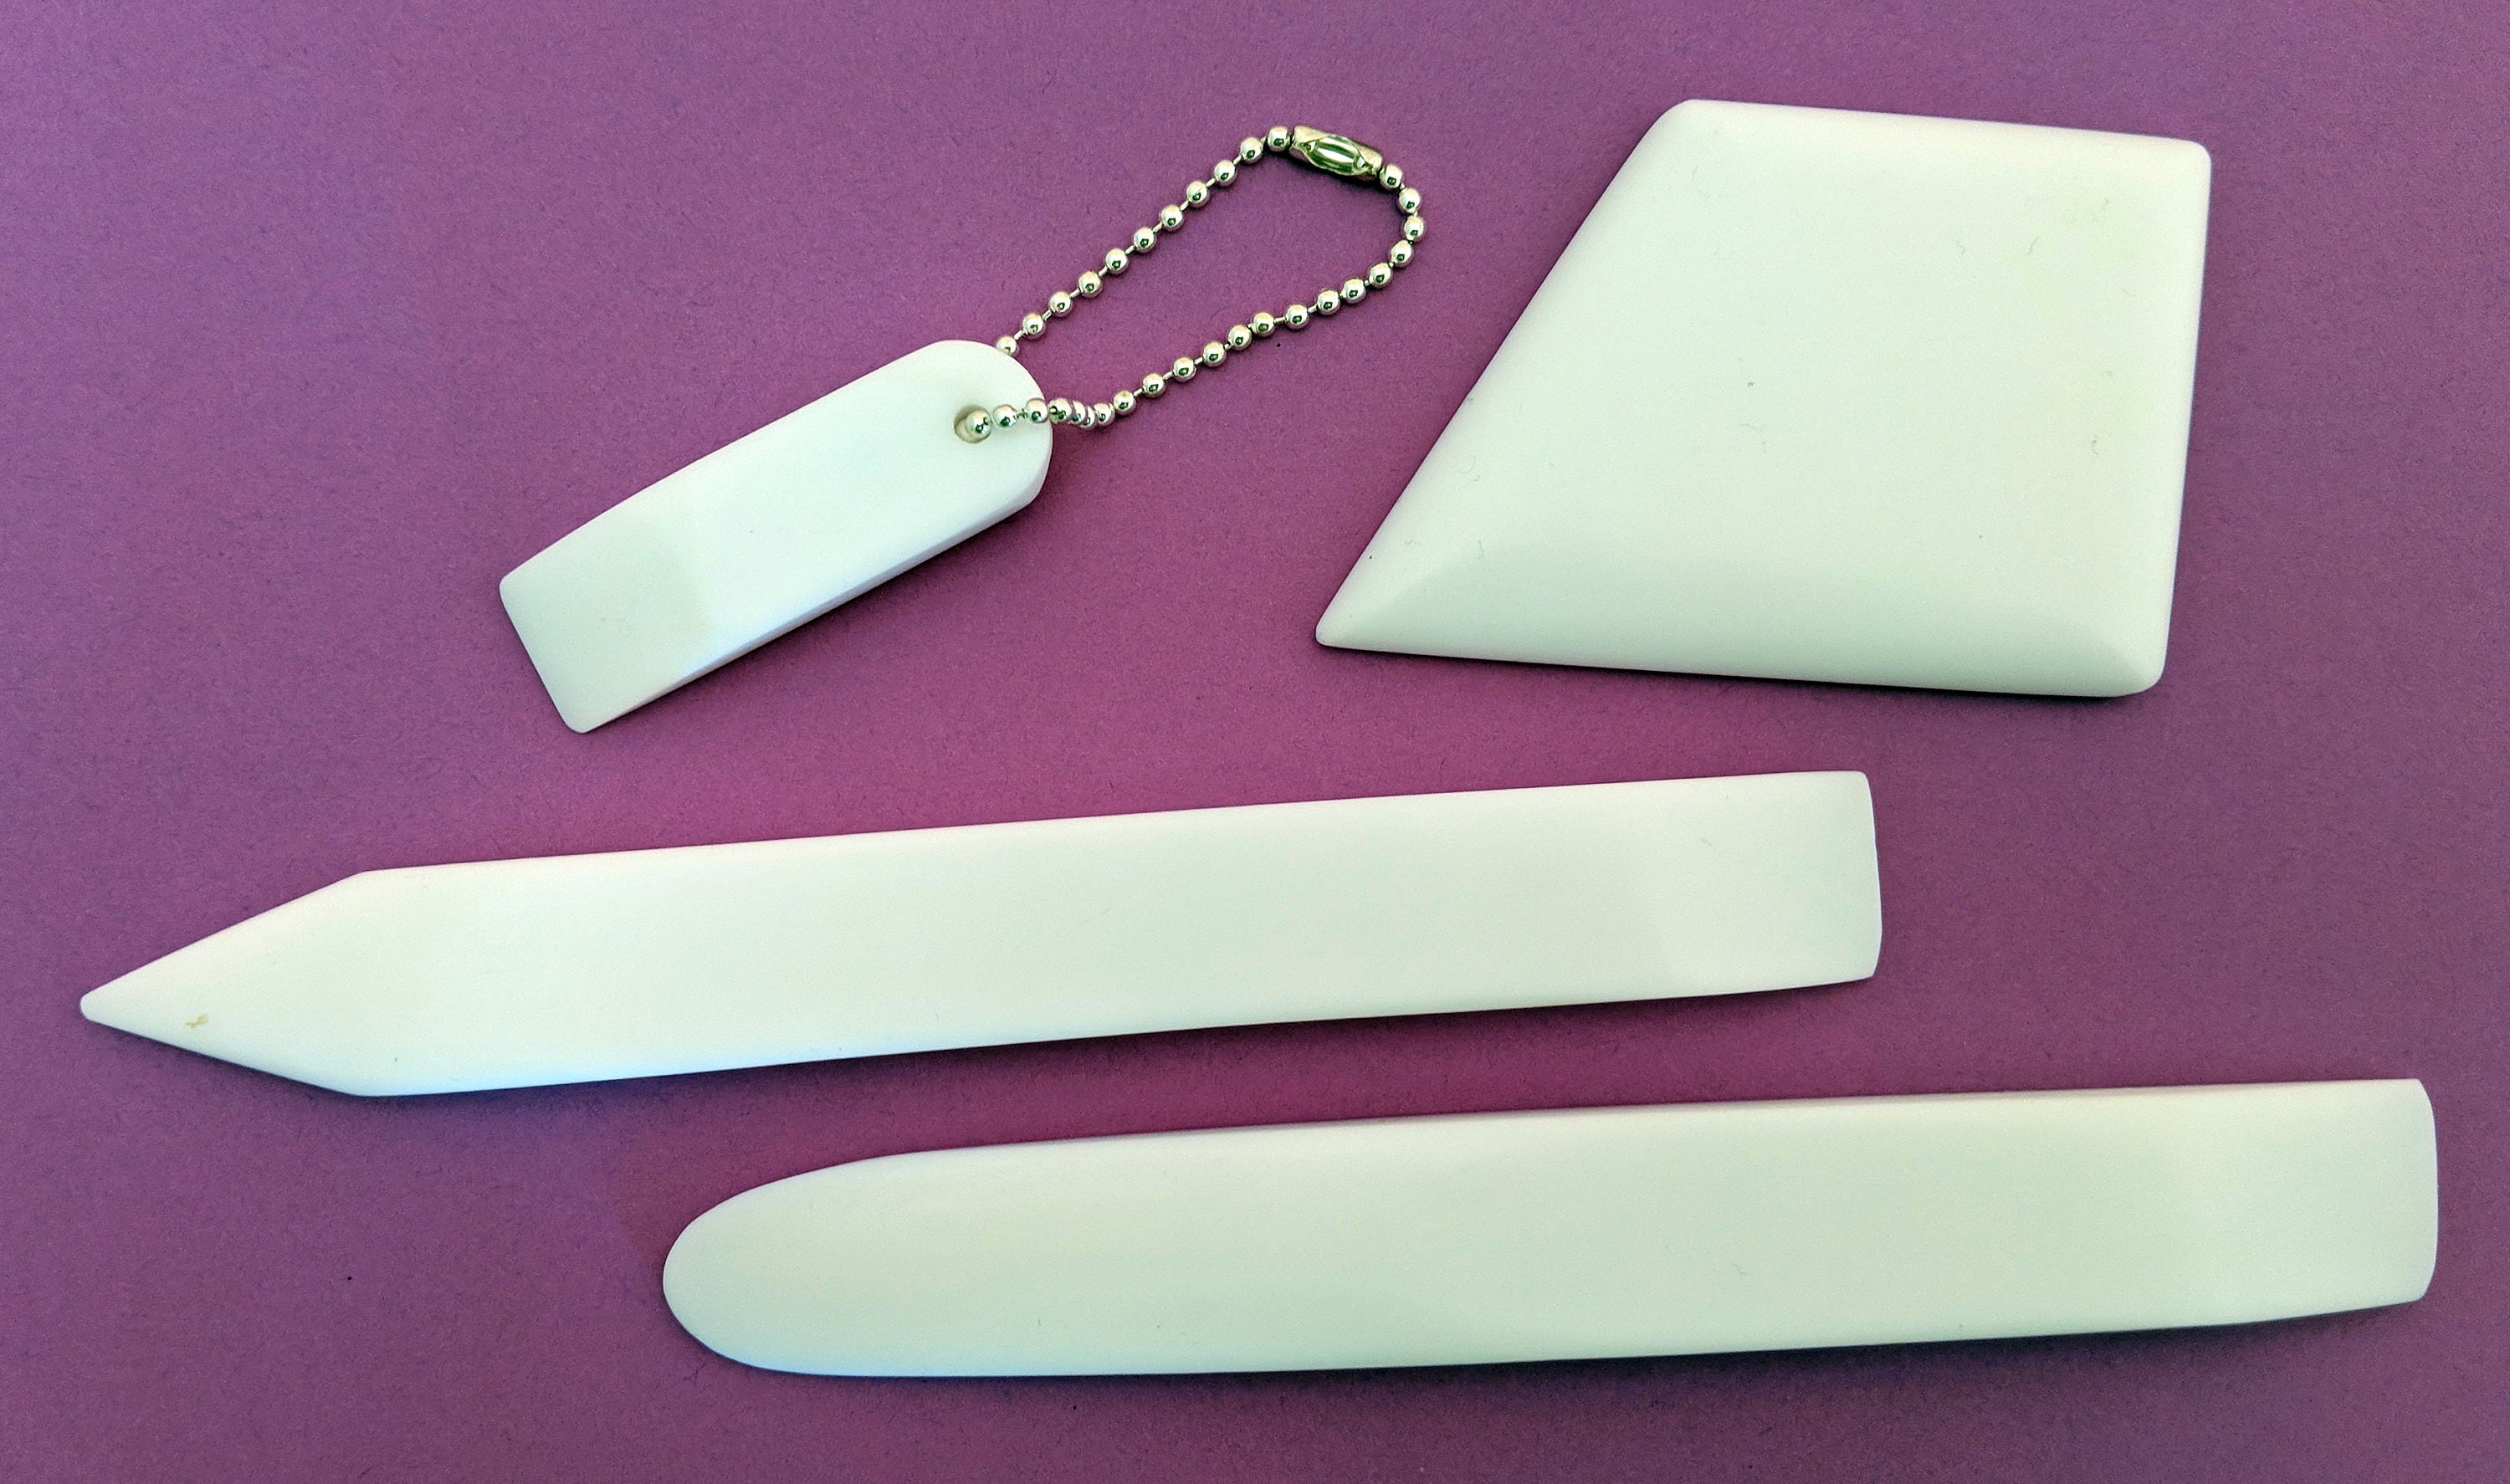 CrafTreat Teflon Bone Folder and Scoring Tool - Lifter - Paper Scorer for  Paper Crafting, Origami, Bookbinding, Scrapbooking - Leather Burnishing  Tool